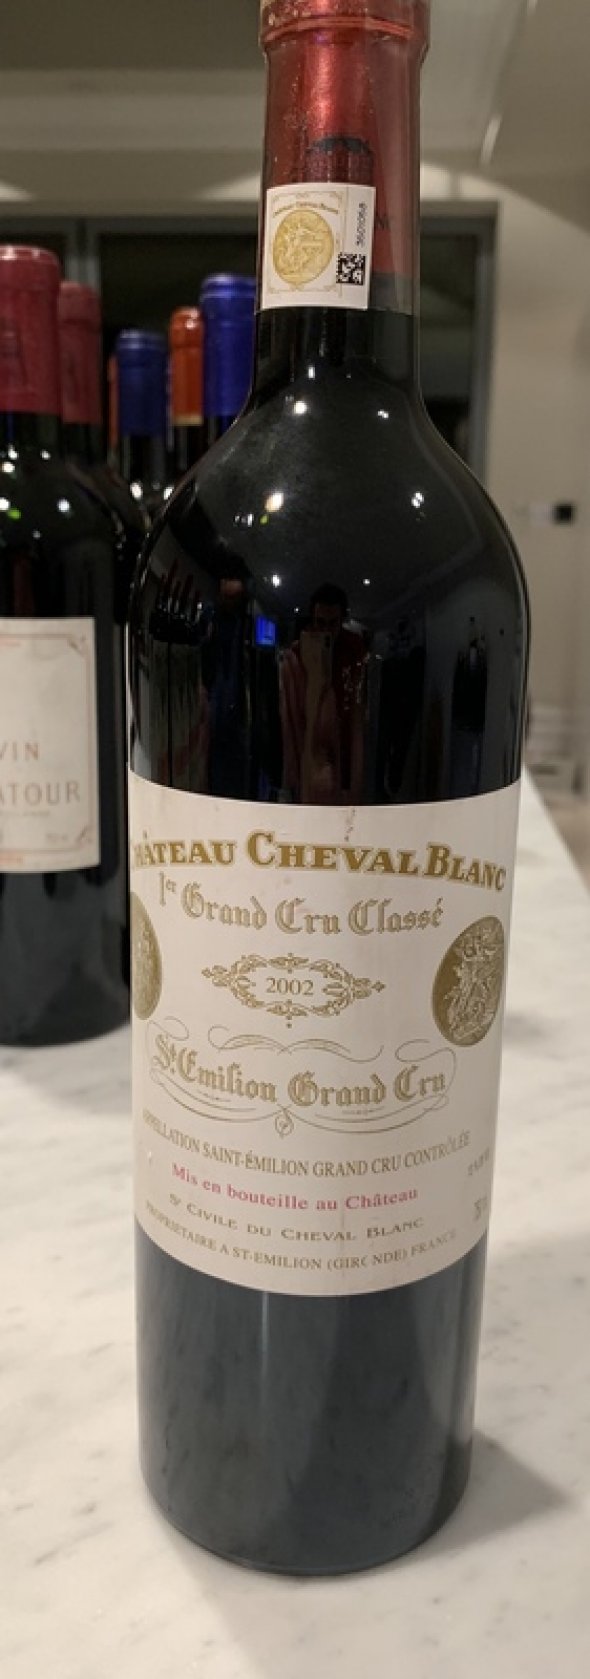 Chateau Cheval Blanc 2002